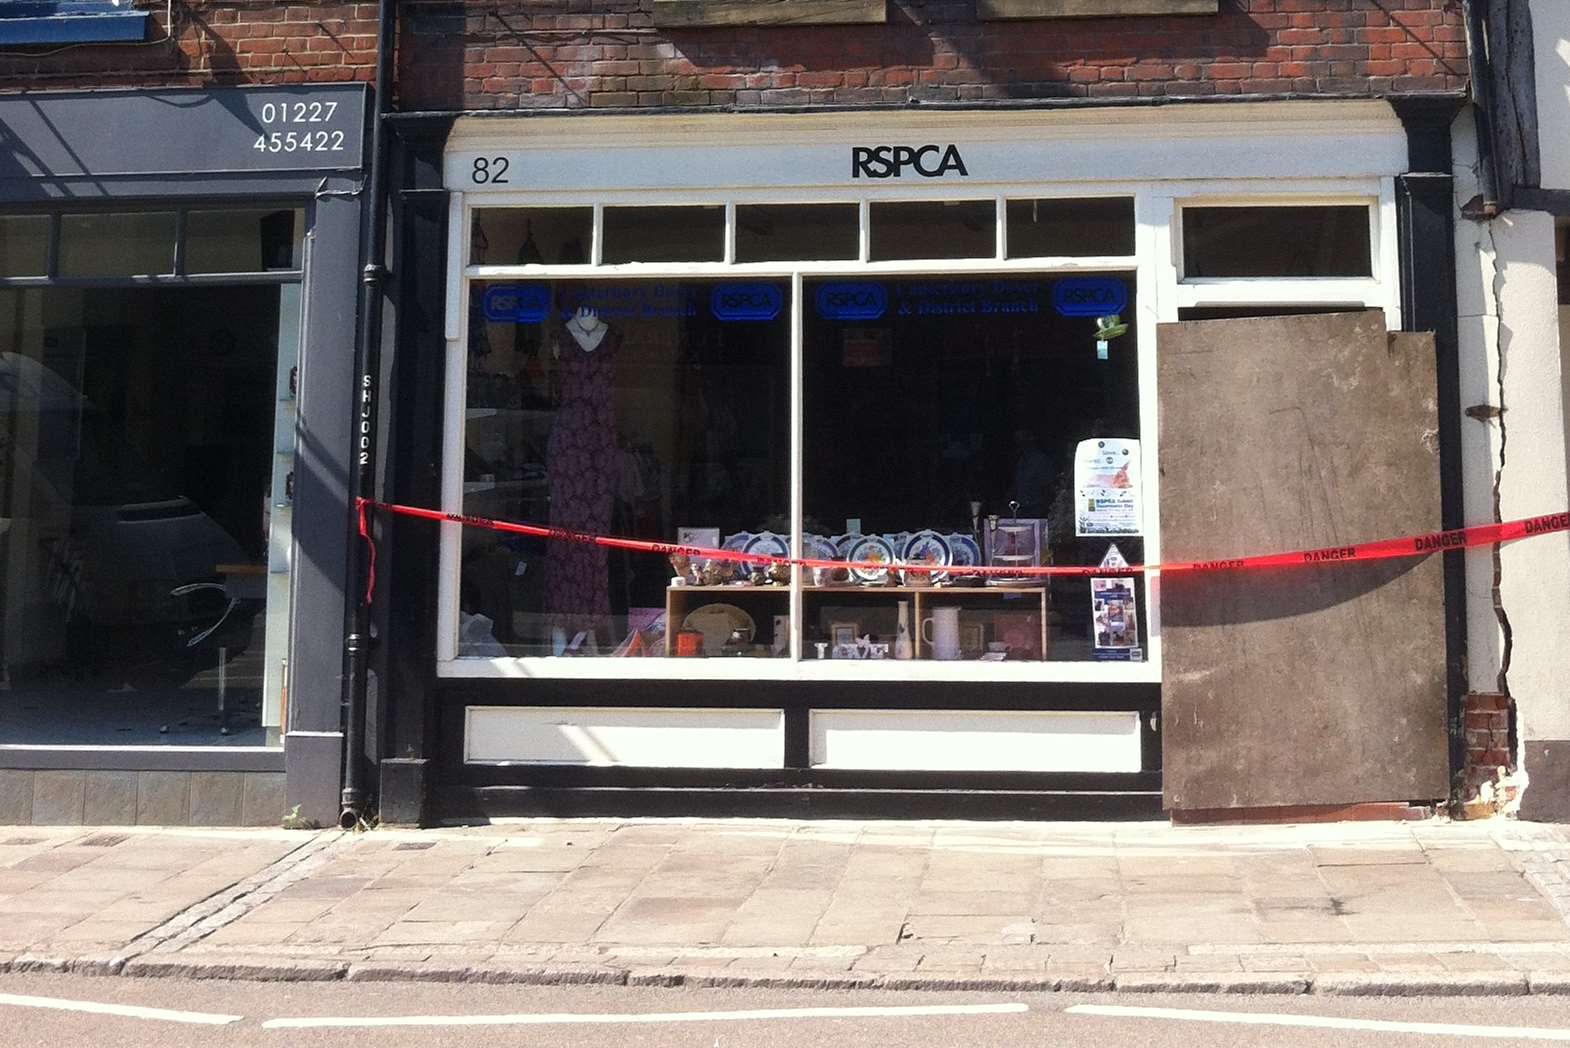 The damaged RSPCA shop in St Dunstan's Street